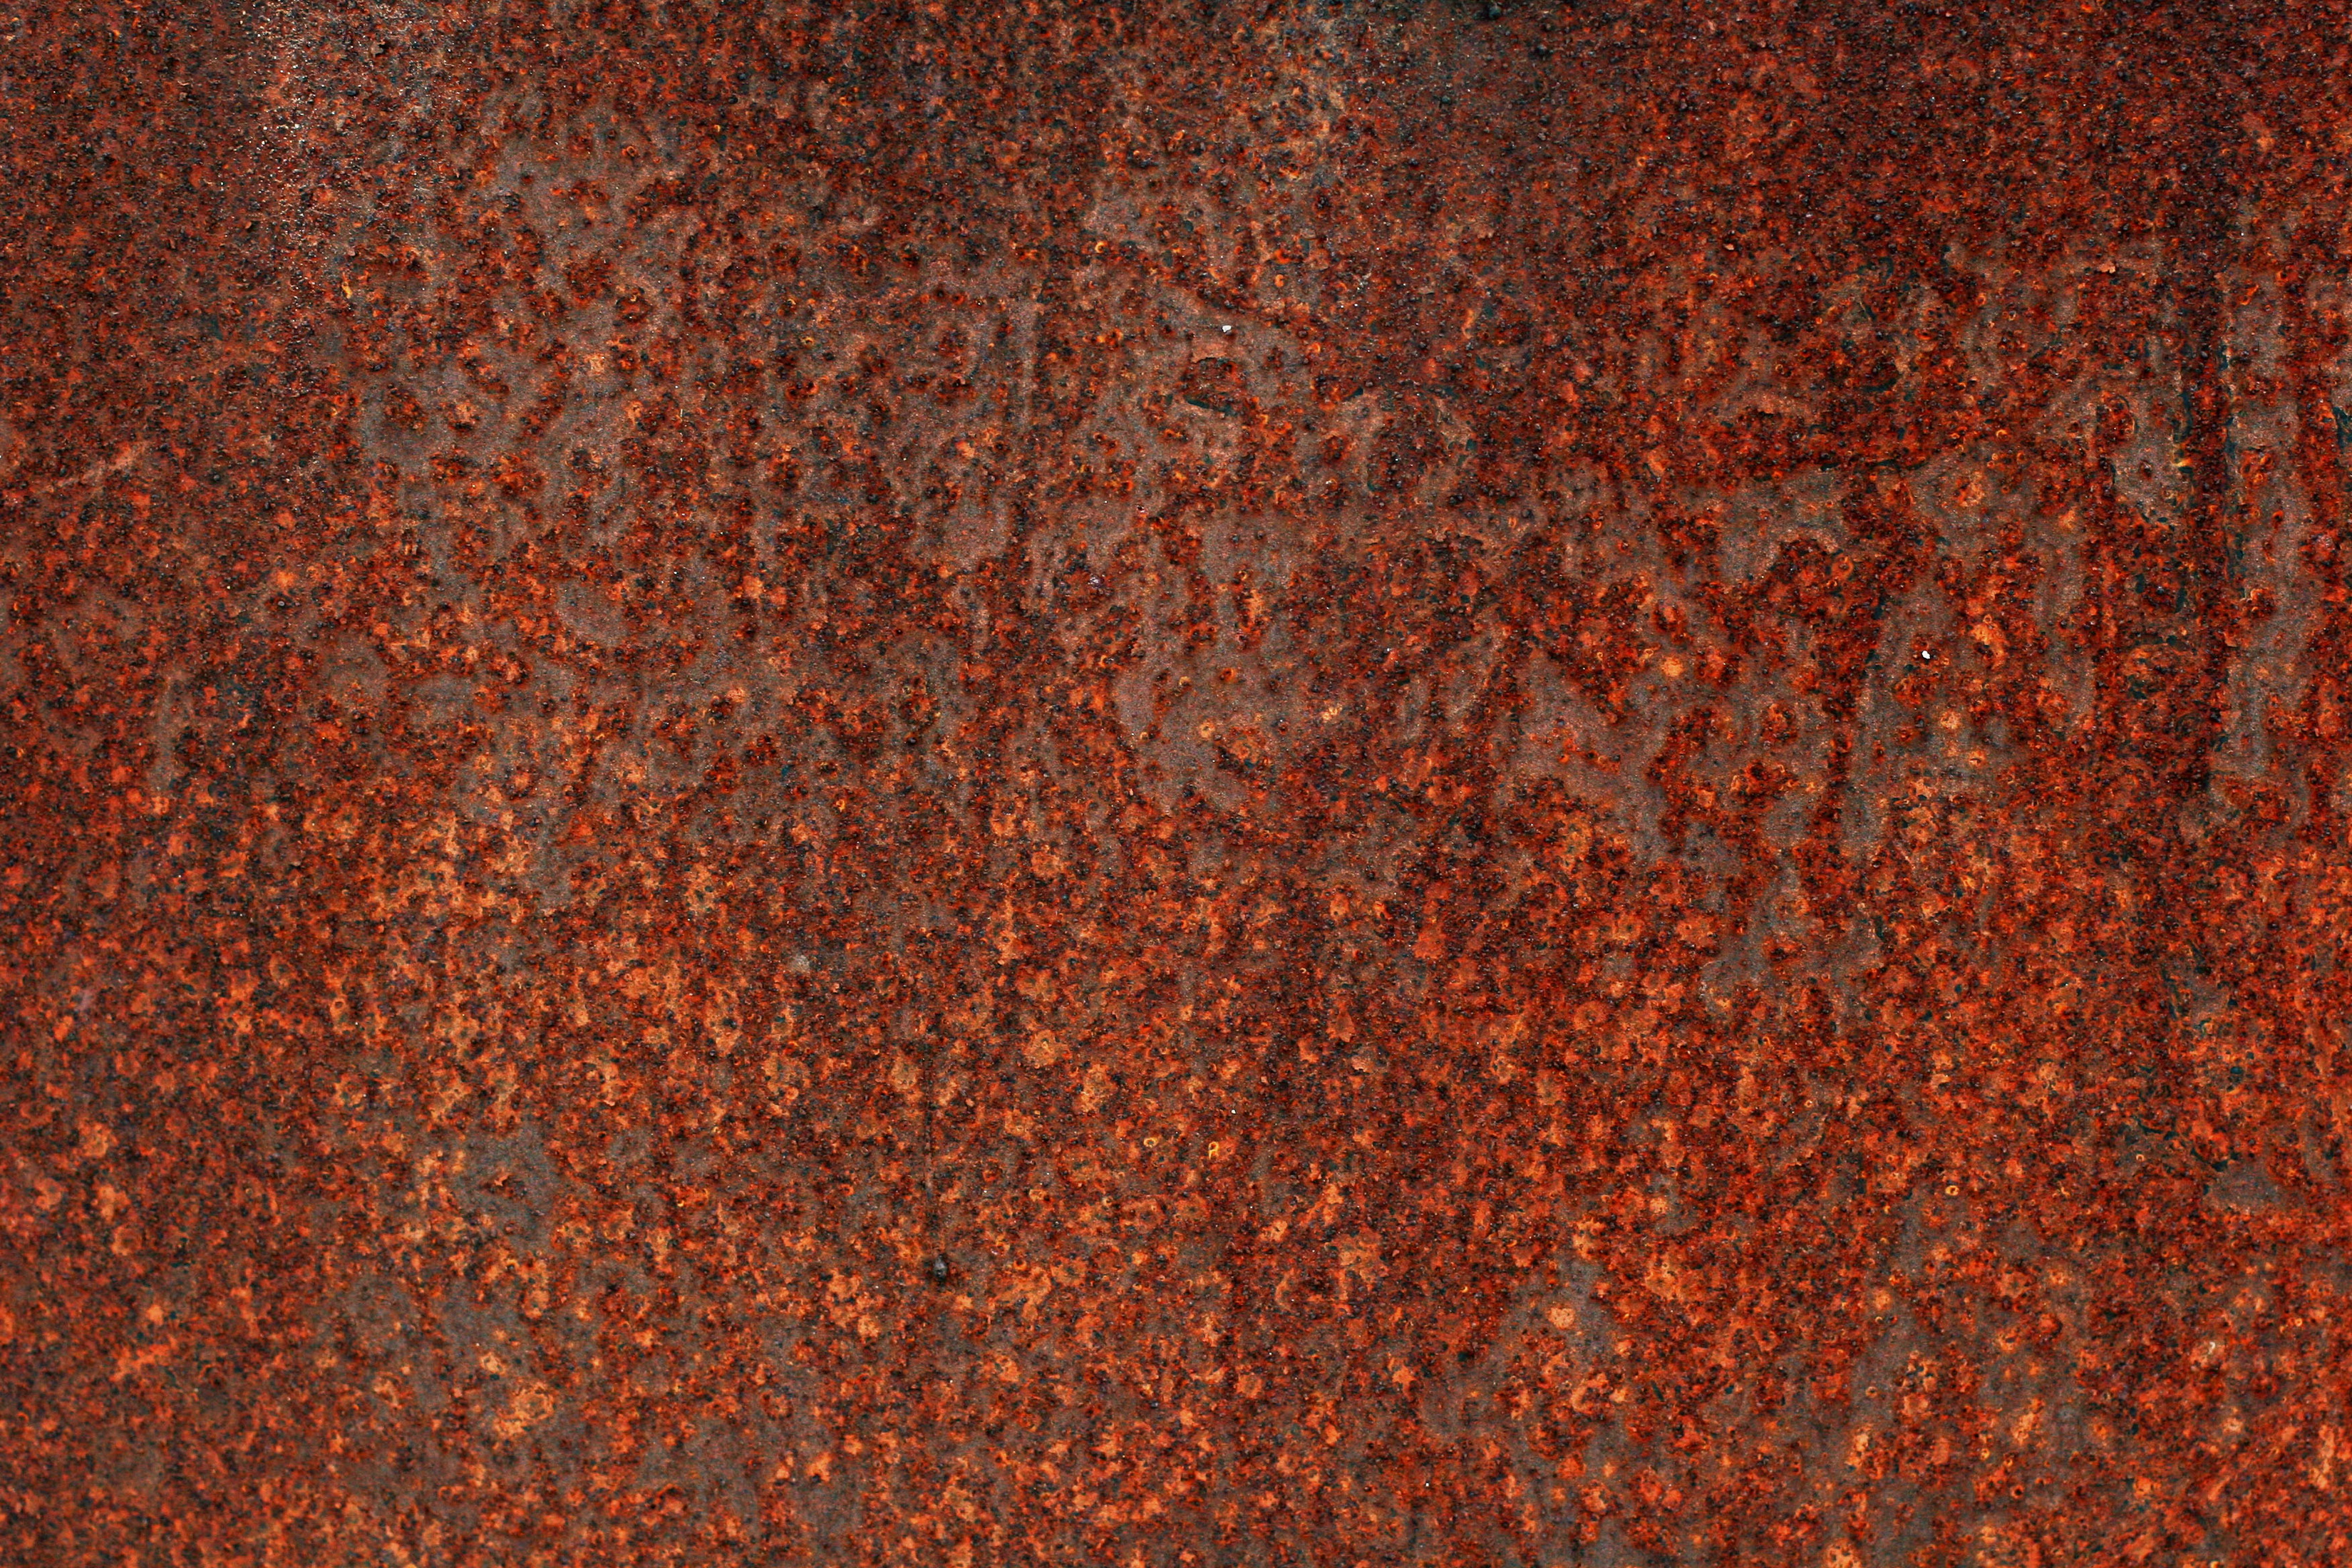 Free Texture - Rusty Metal Background | Metal Textures | Pinterest ...